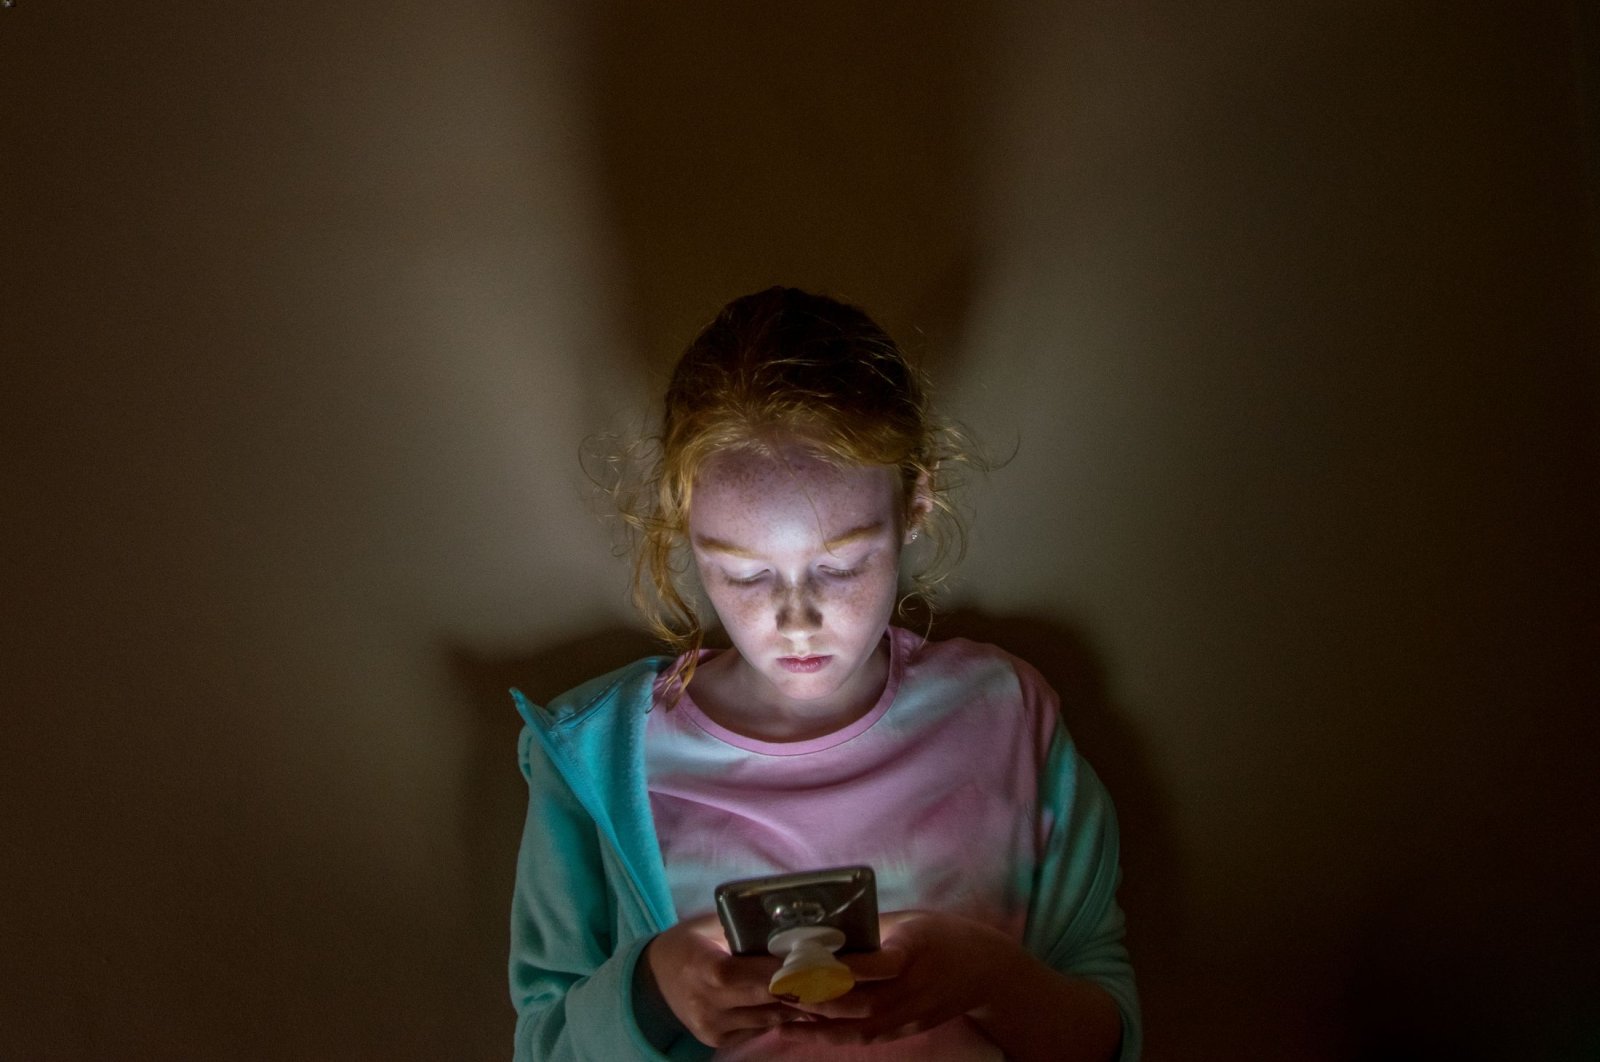 Keluarga yang tidak terlibat membuat anak-anak rentan terhadap cyberbullying